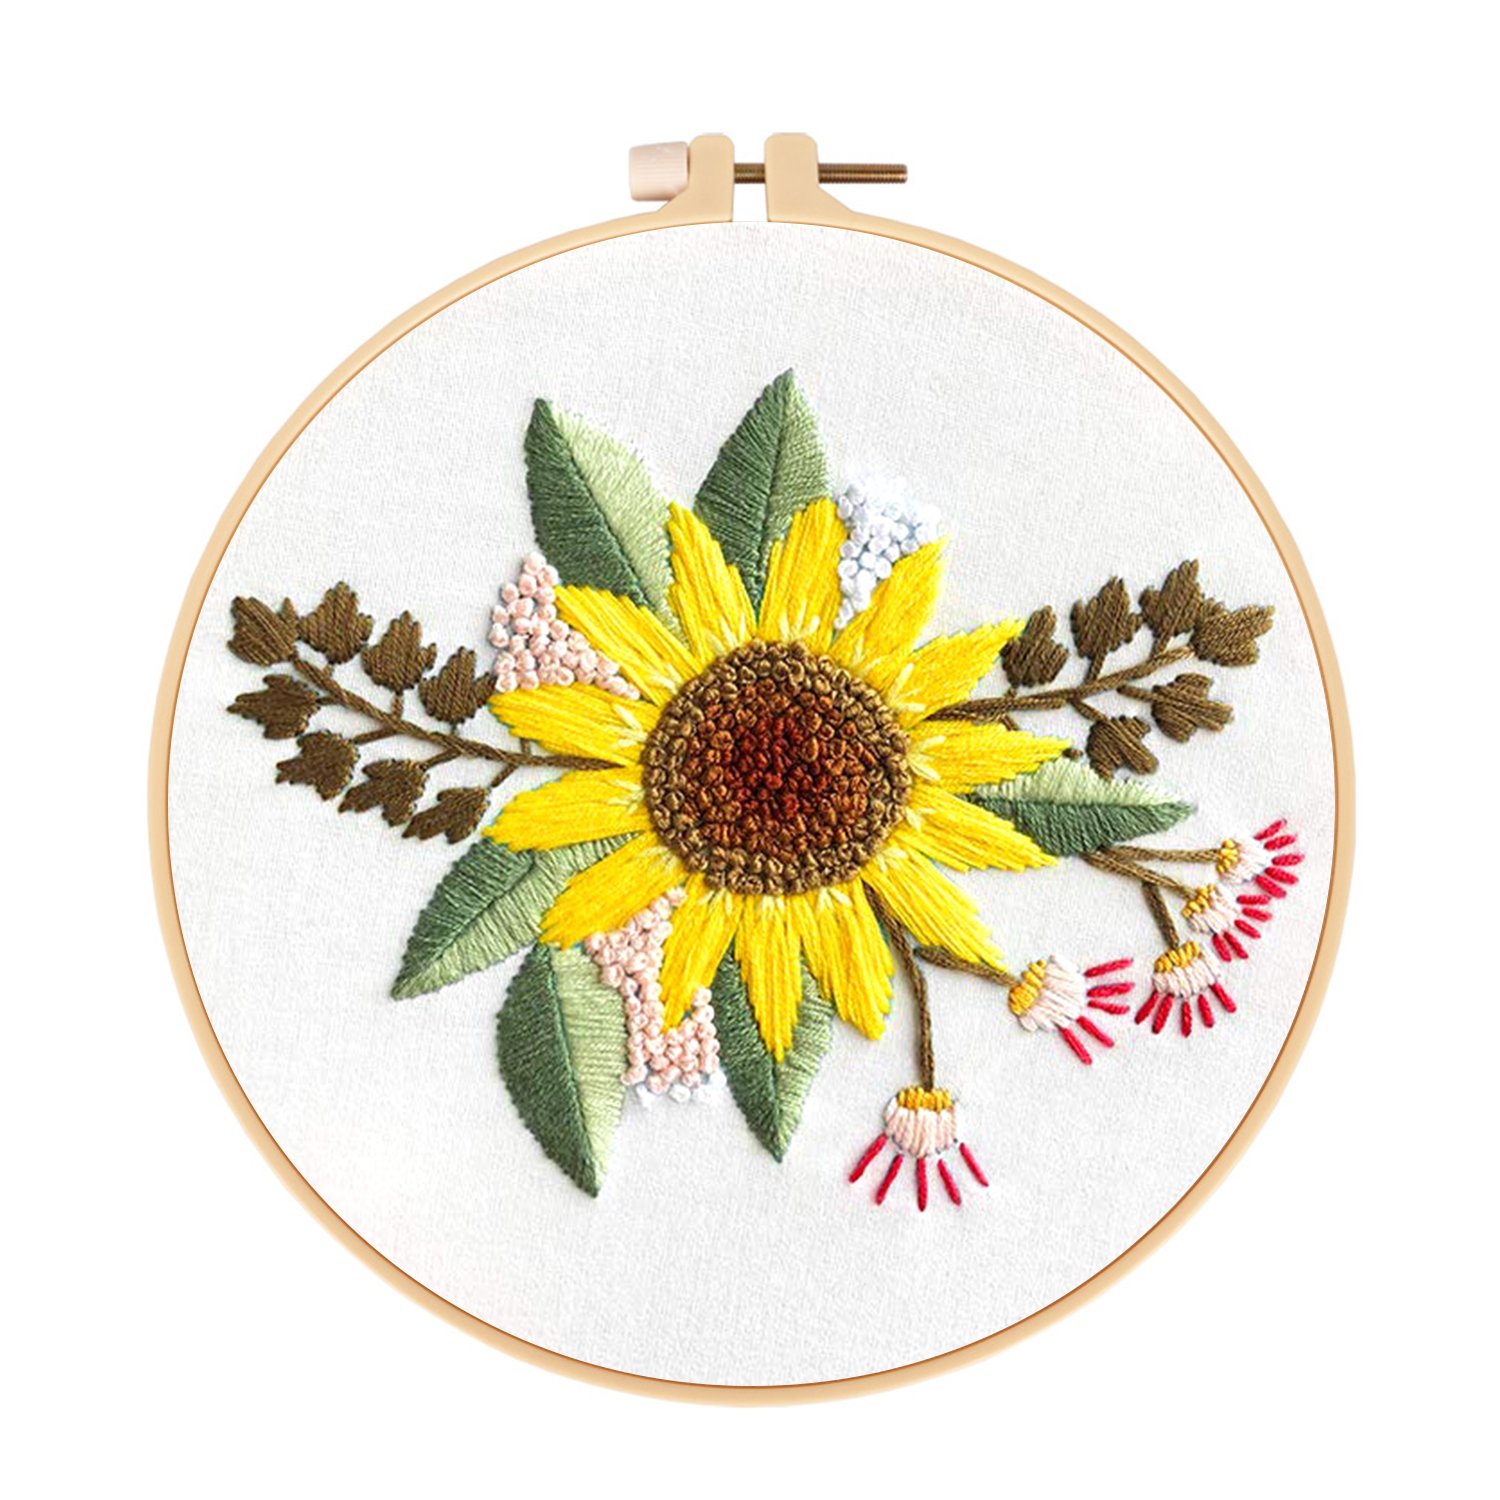 DIY Handmade Embroidery Cross stitch kit for Adult Beginner - Sunflower Pattern